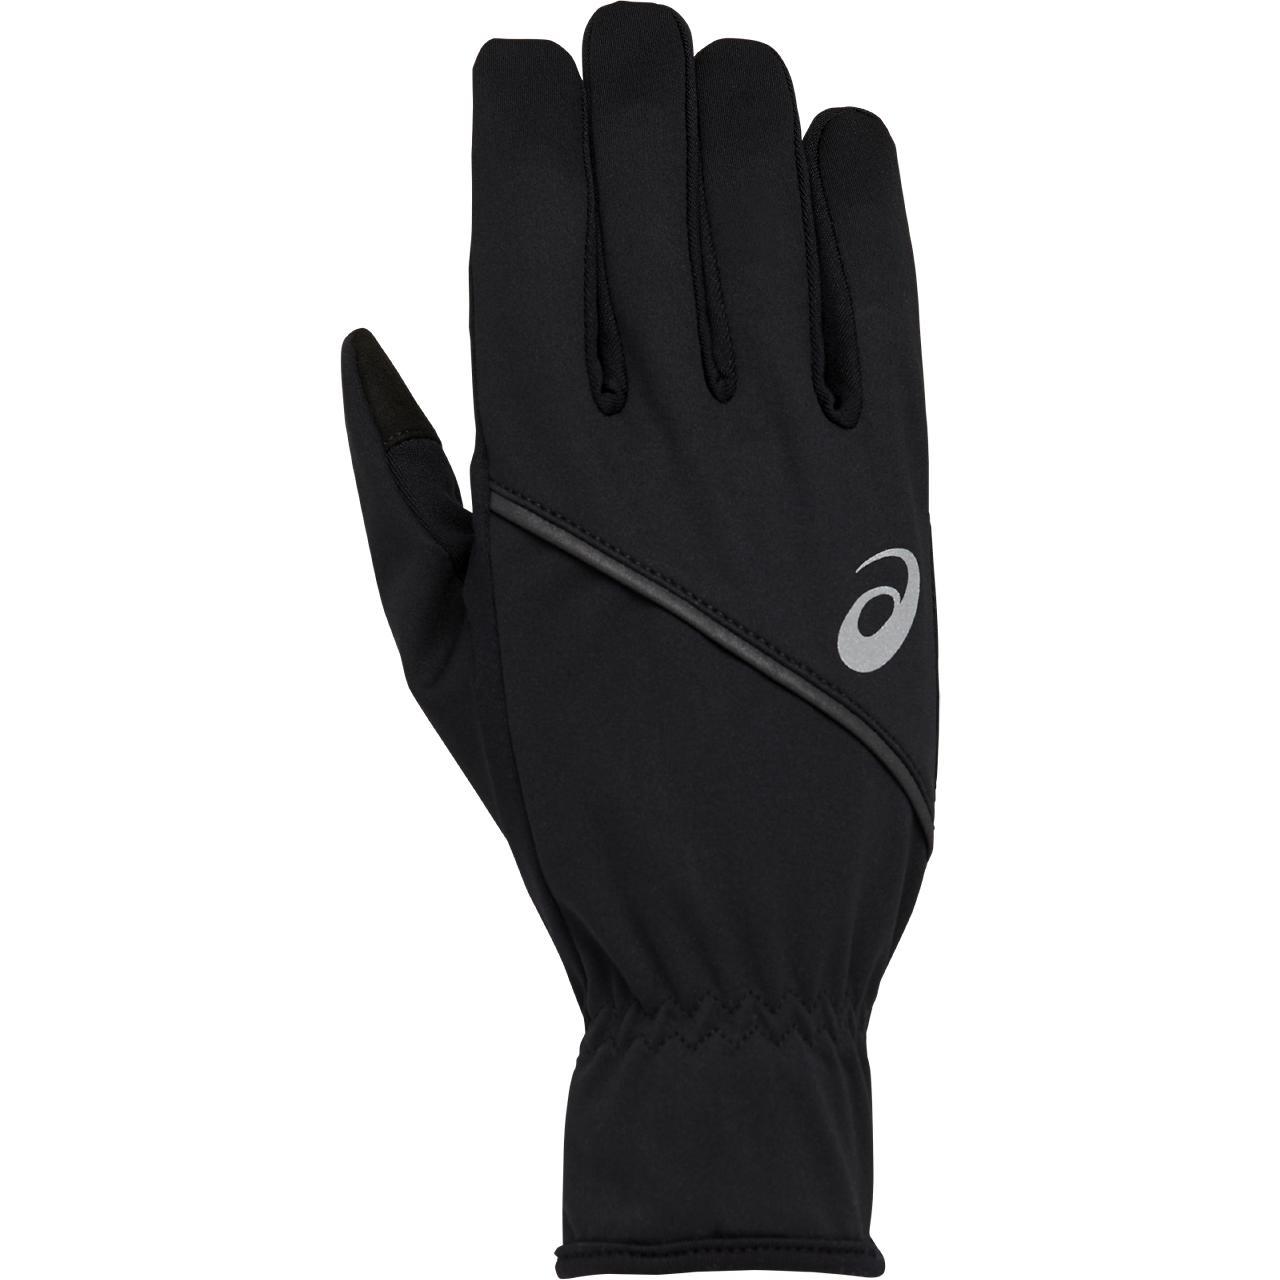 Asics Thermal Running Gloves - Performance Black